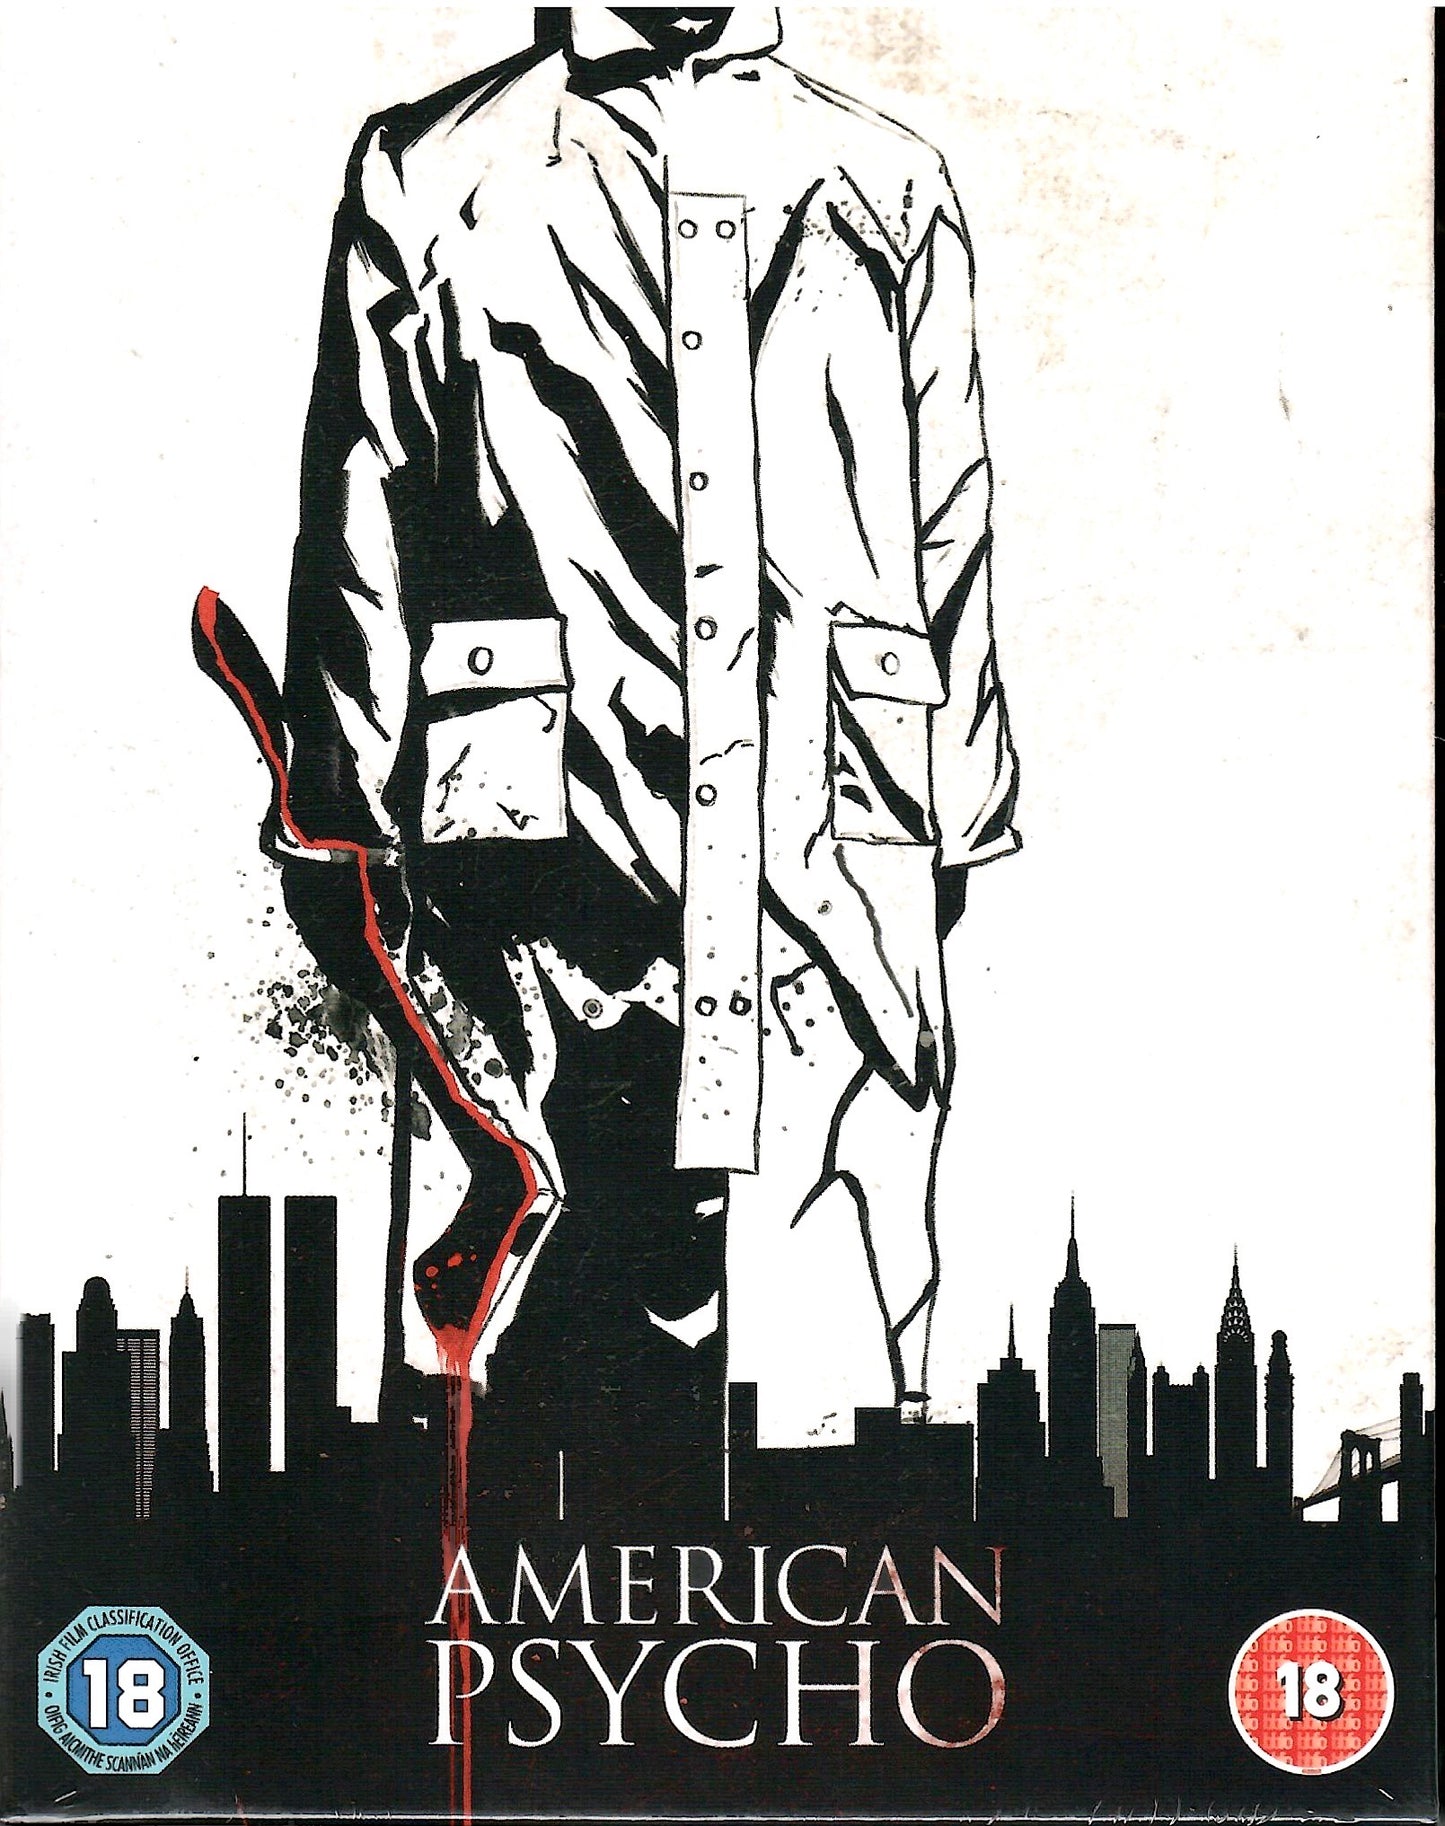 American Psycho (4K + Blu-ray + Digital Copy) Steelbook 